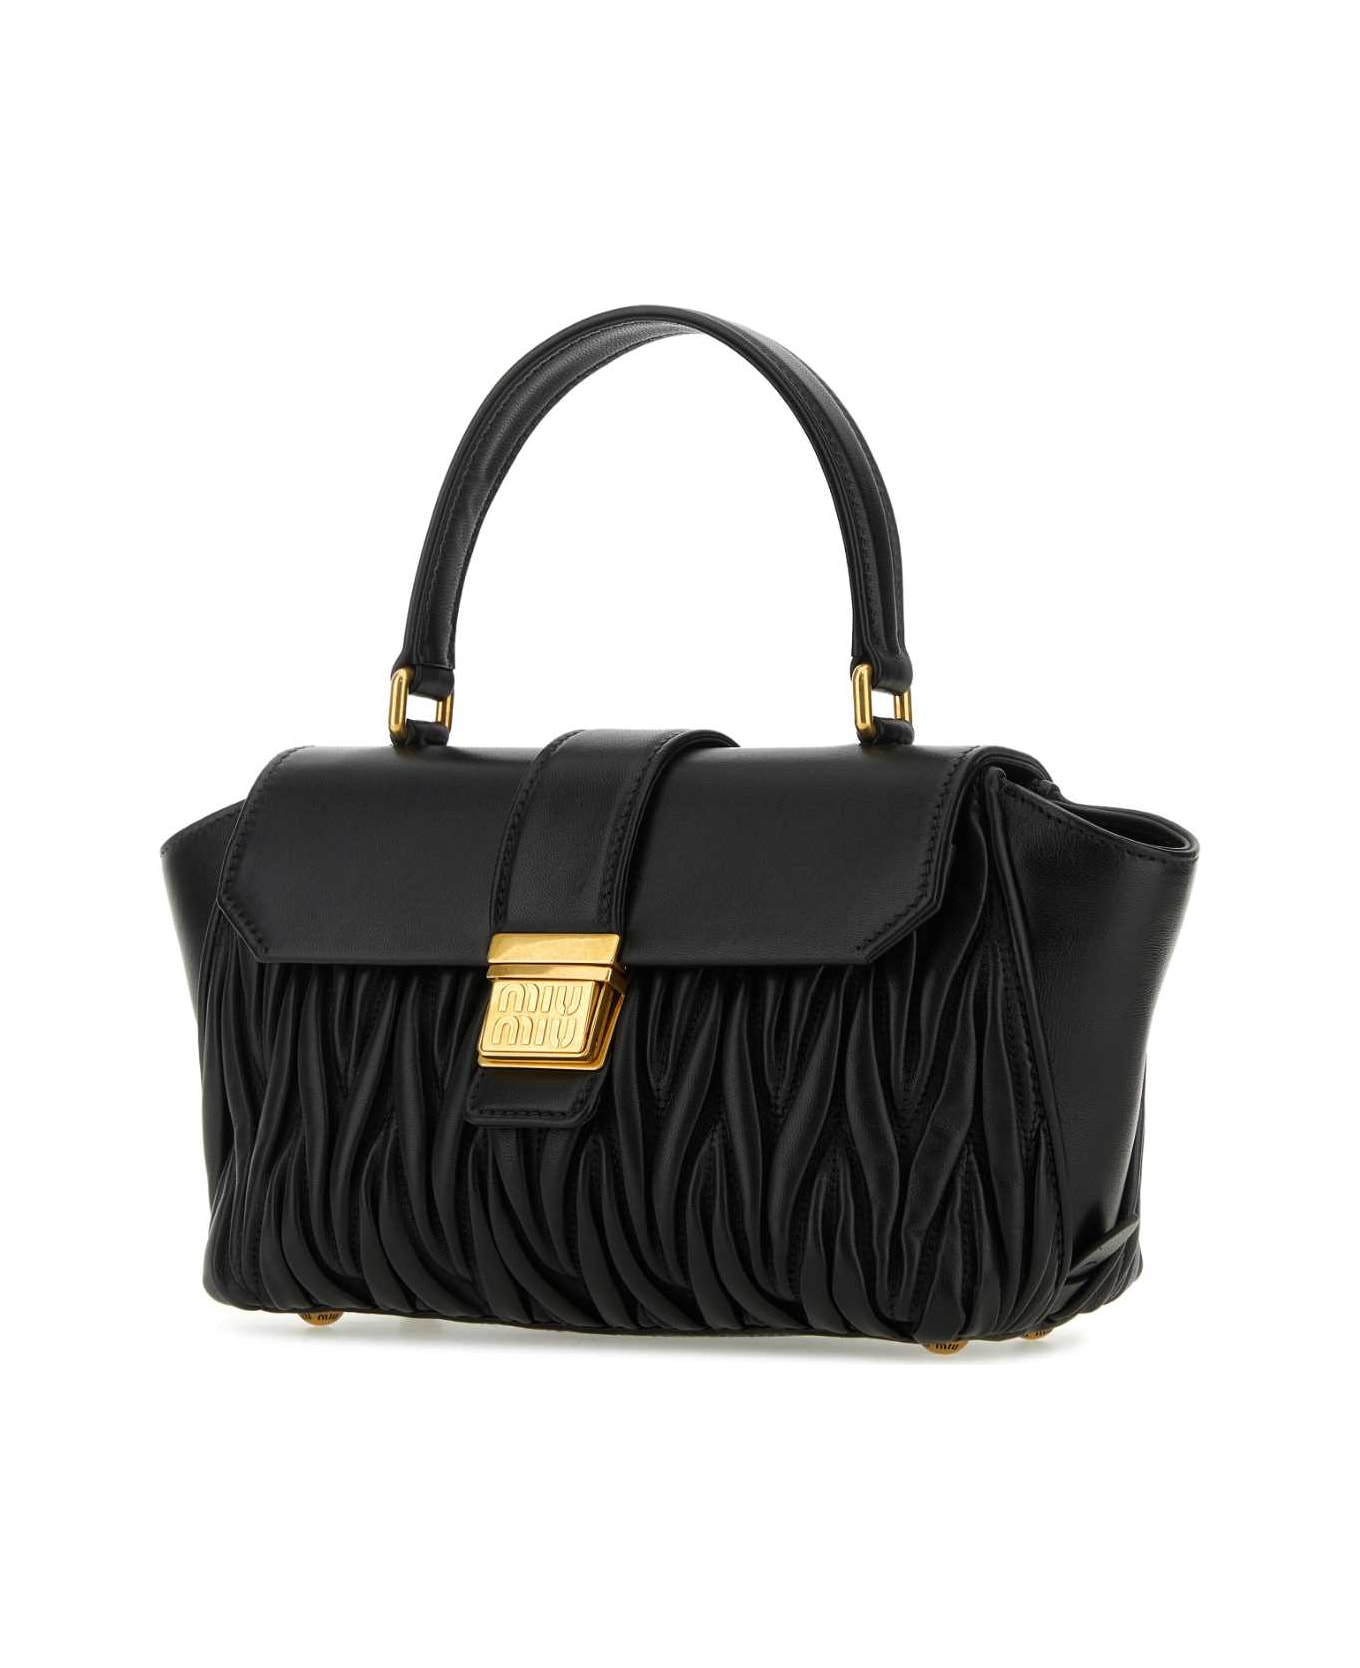 Miu Miu Black Leather Handbag - NERO